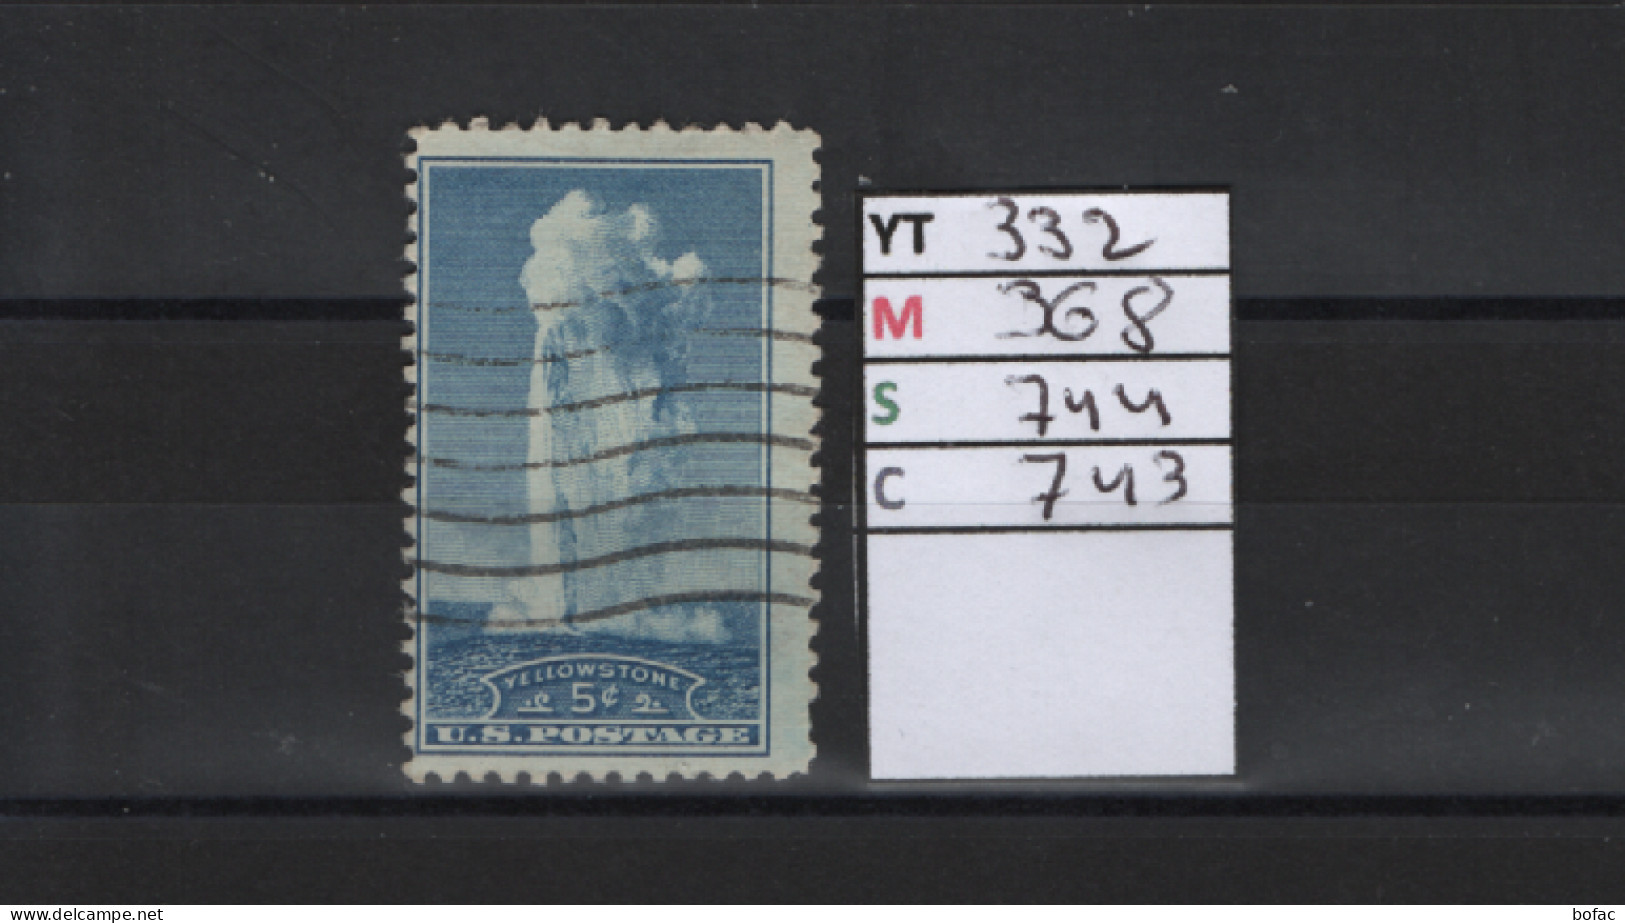 PRIX FIXE Obl 332 YT 368 MIC 744 SCSOT 743 GIB Geyser Wyoming 1934 Etats Unis 58A/01 - Usati